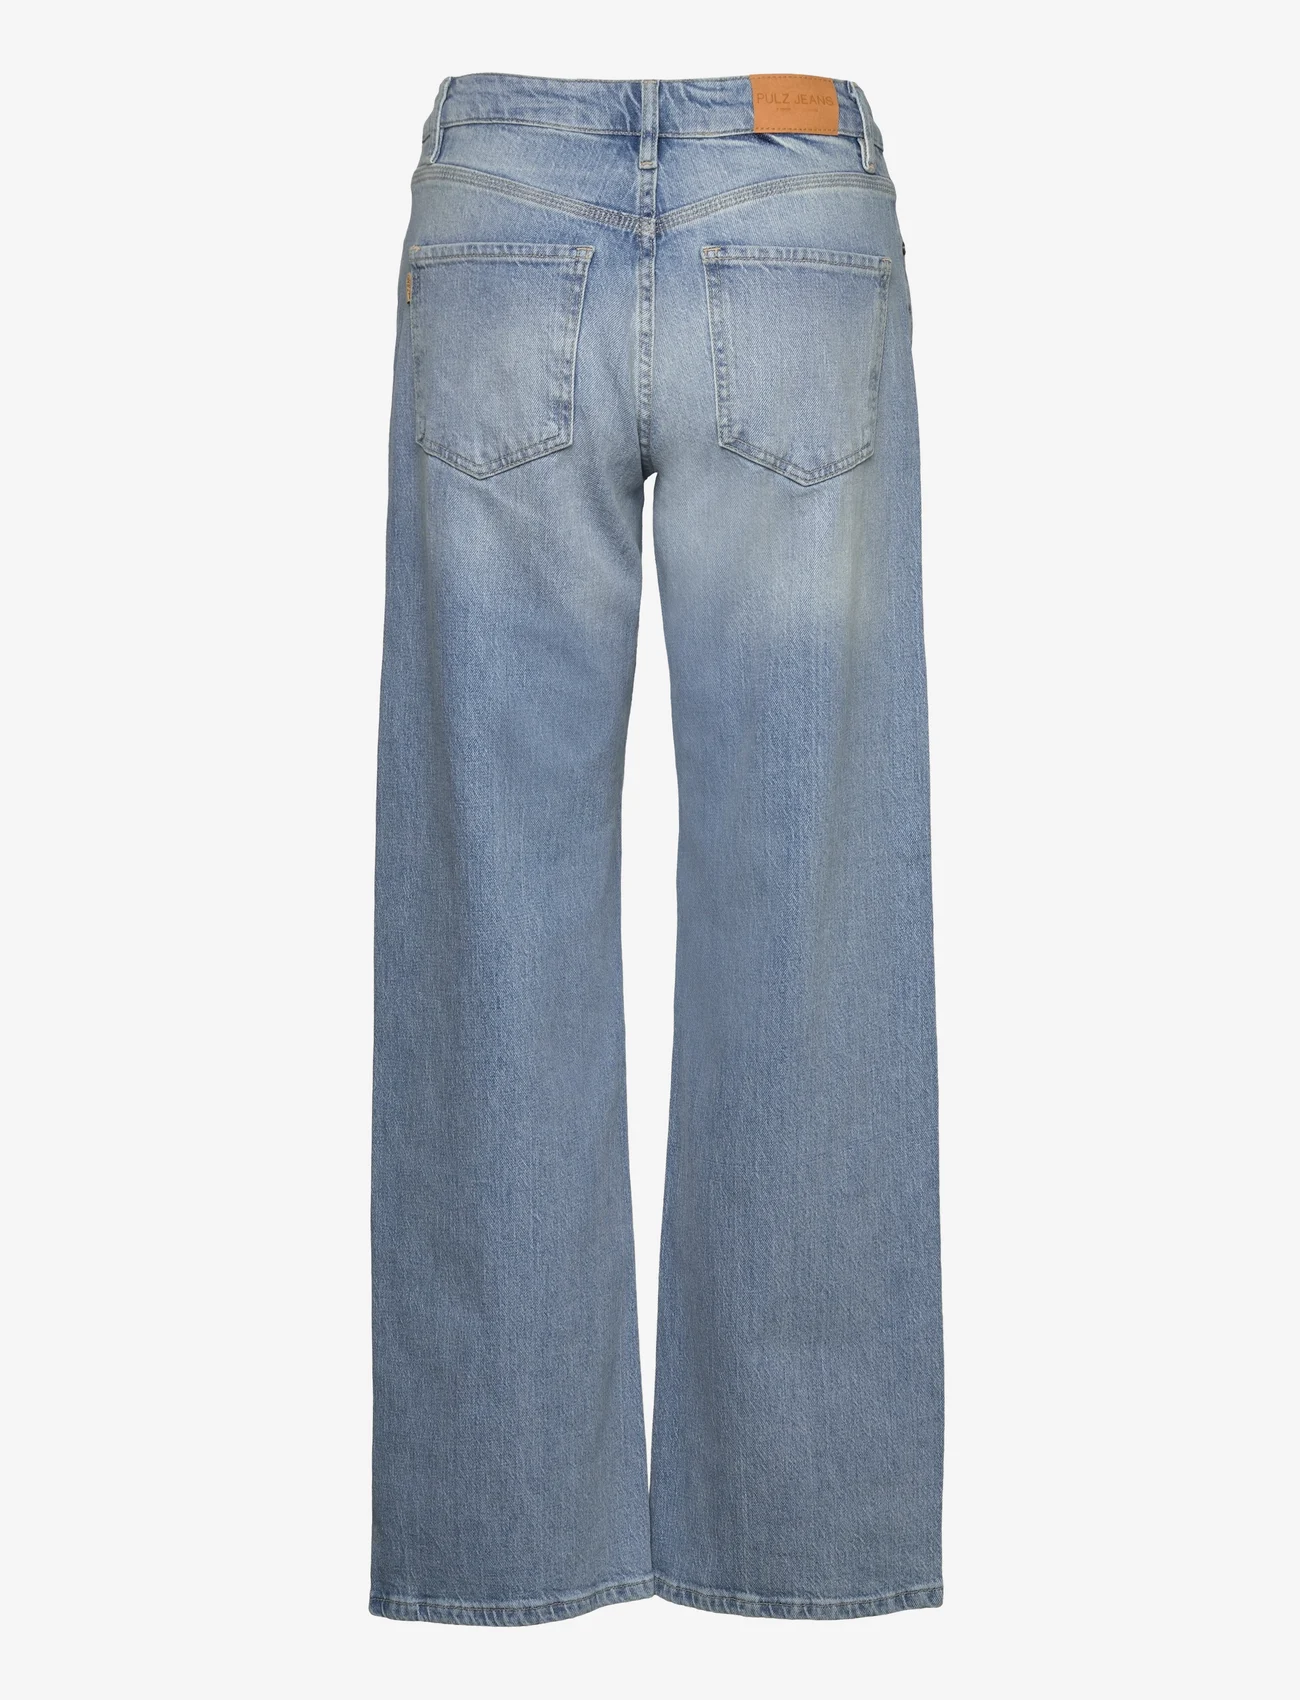 Pulz Jeans - PZVEGA HW Jeans Wide Leg - laia säärega teksad - light blue denim - 1